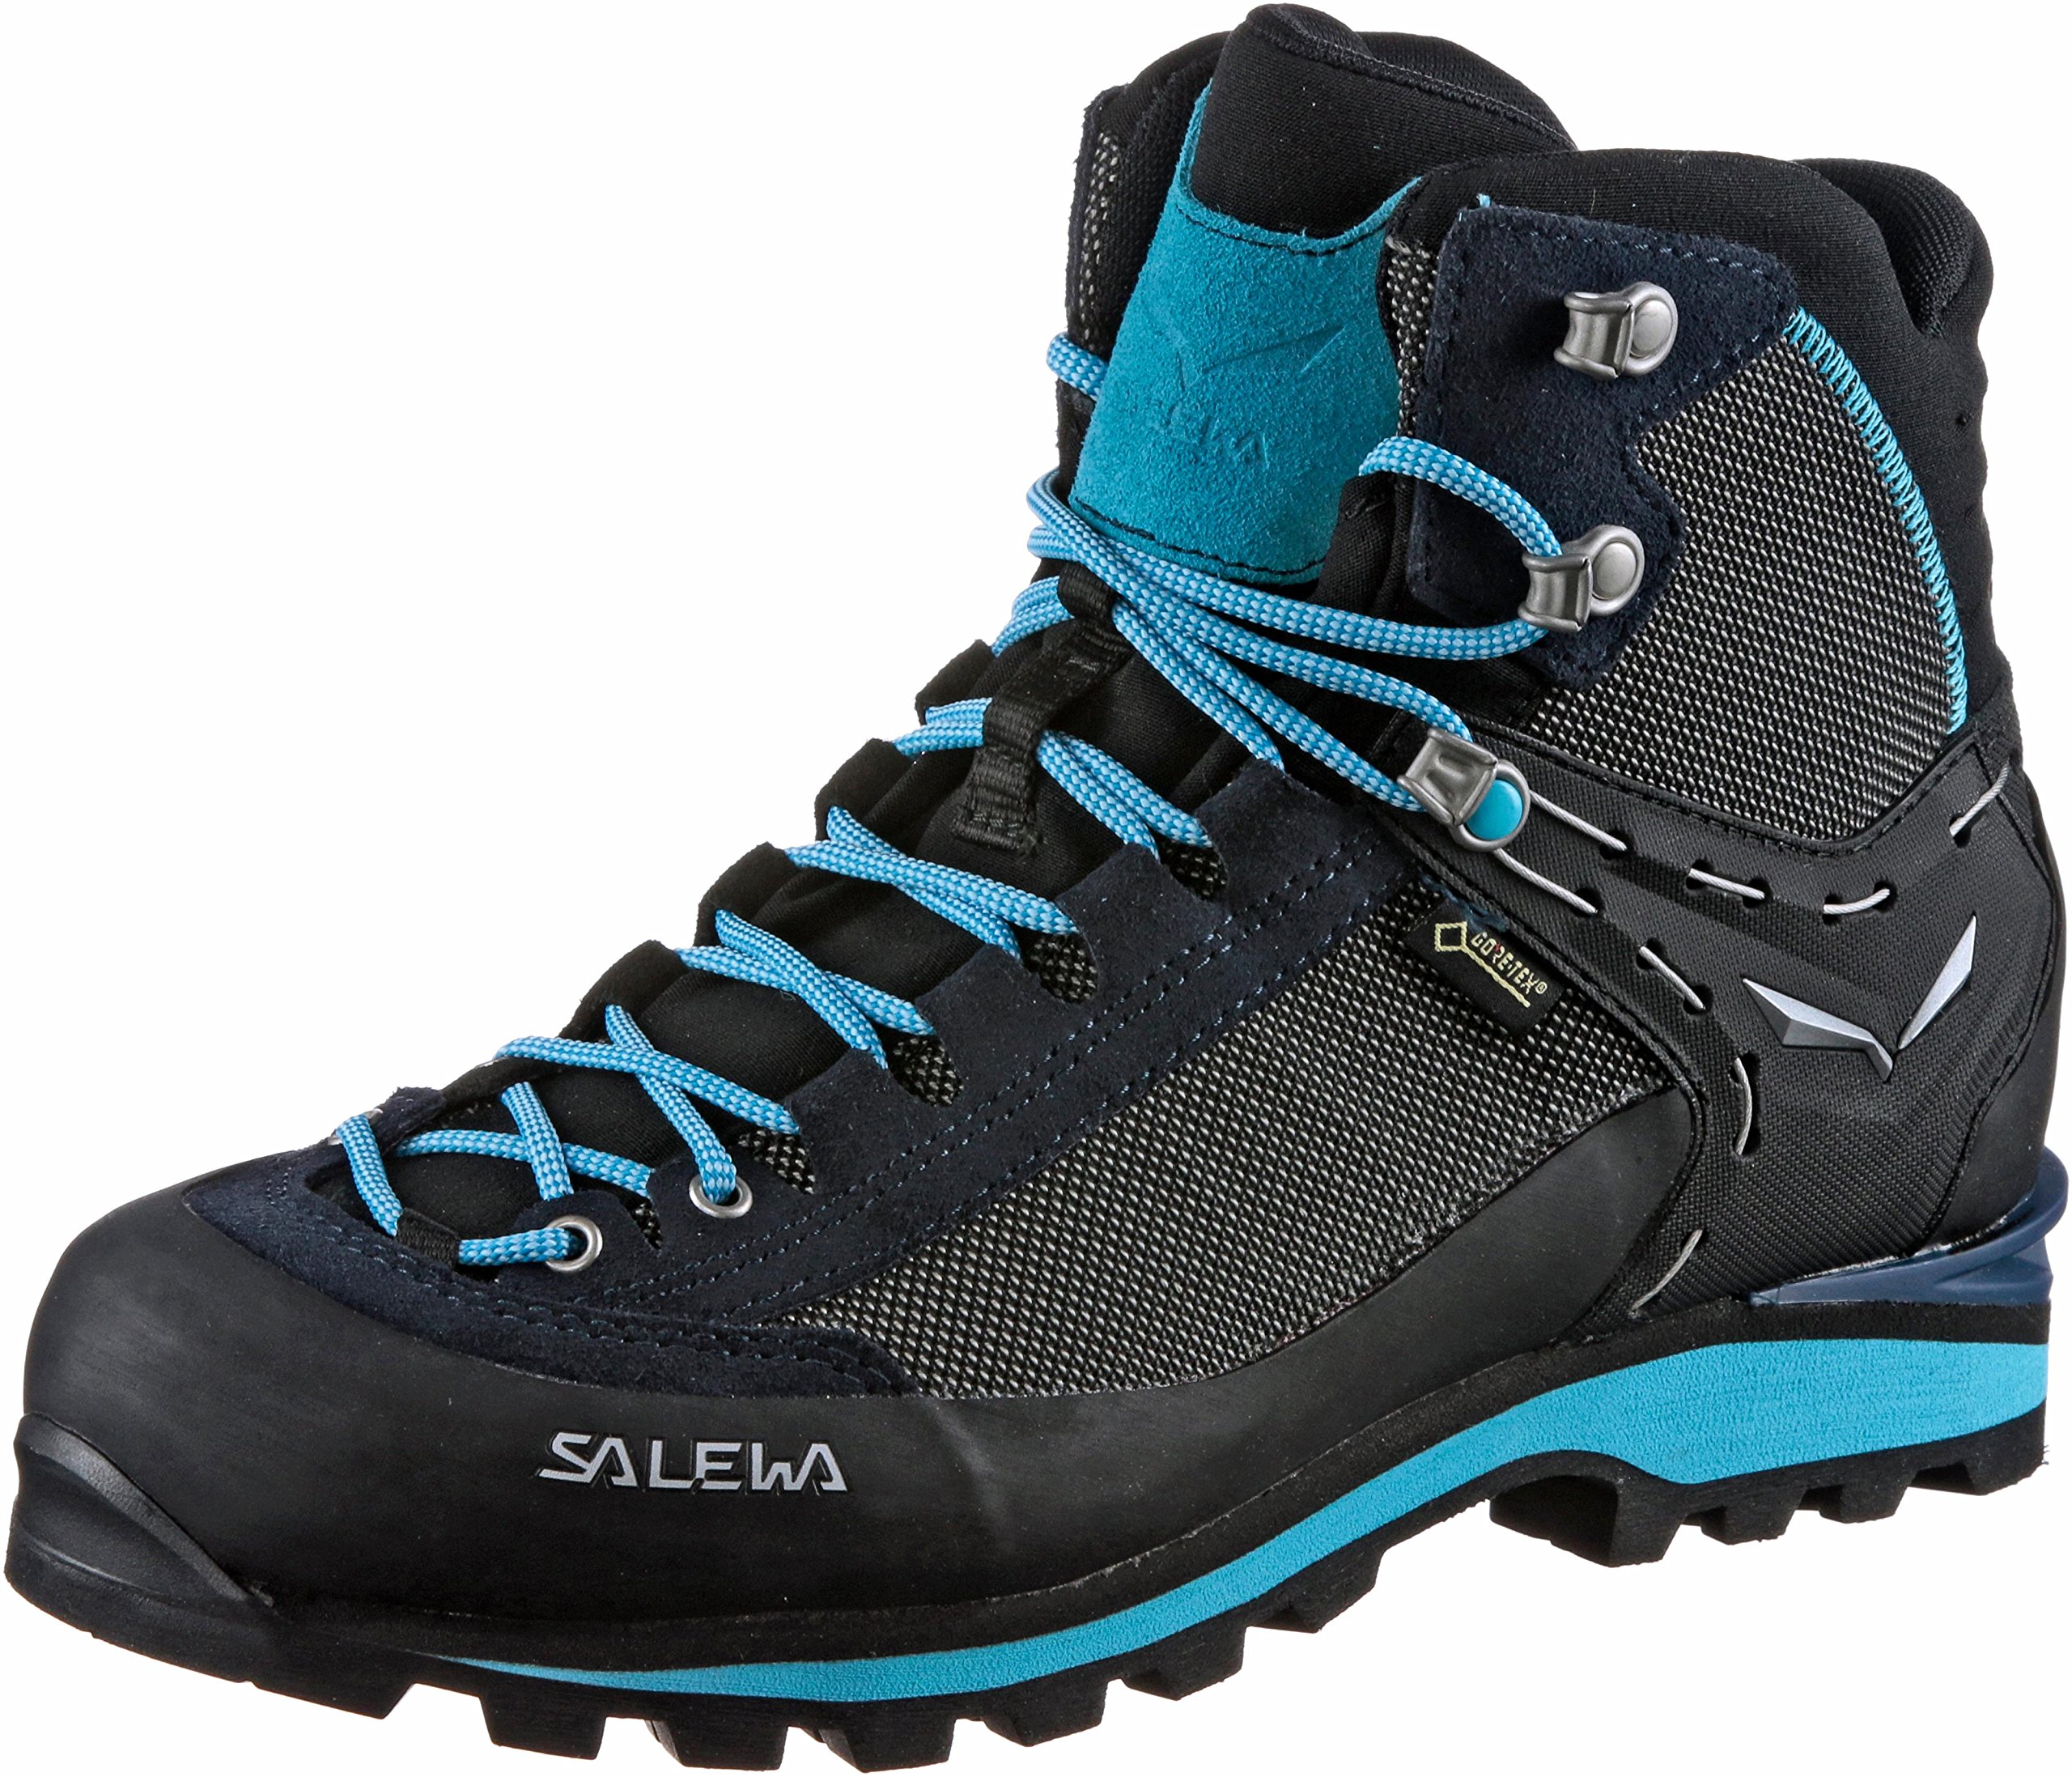 Salewa WS Crow Gore-TEX Damen Trekking- & Wanderstiefel, Blau (Premium Navy/Ethernal Blue), 40.5 EU